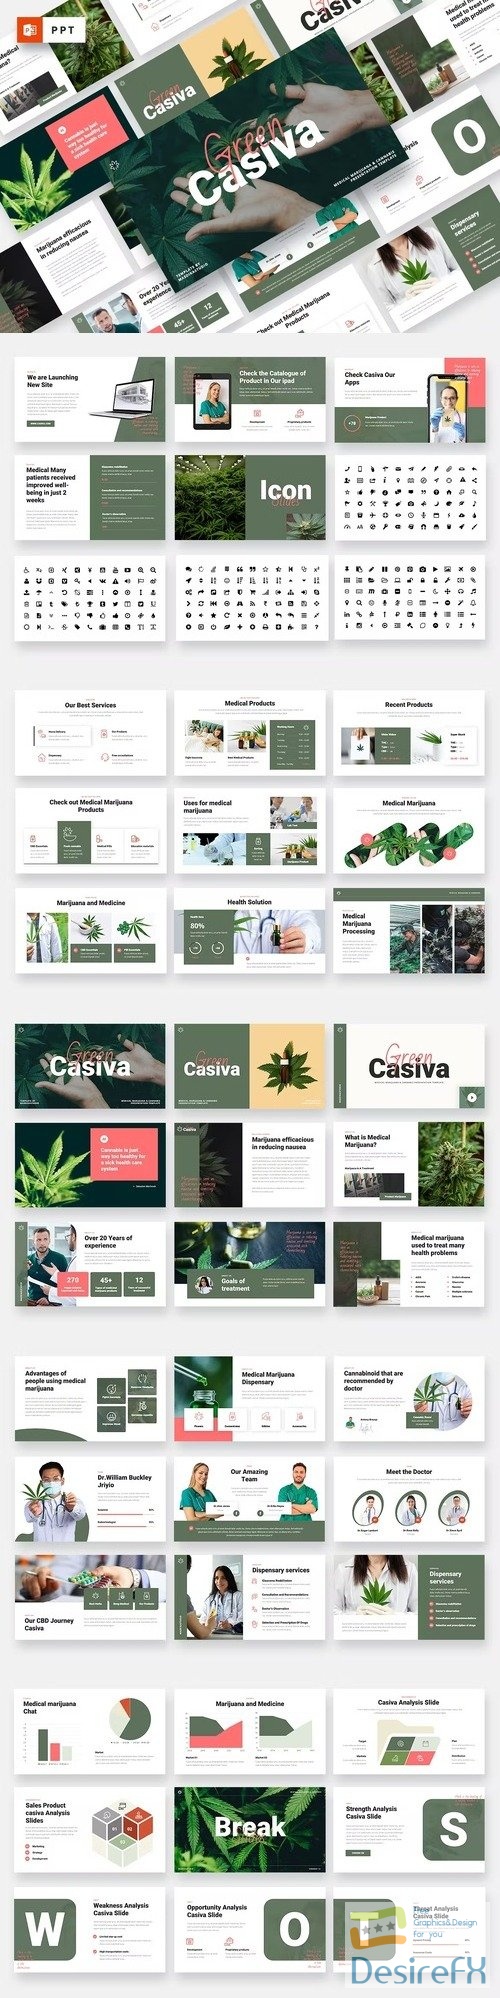 G Casiva - Medical Marijuana Powerpoint Template